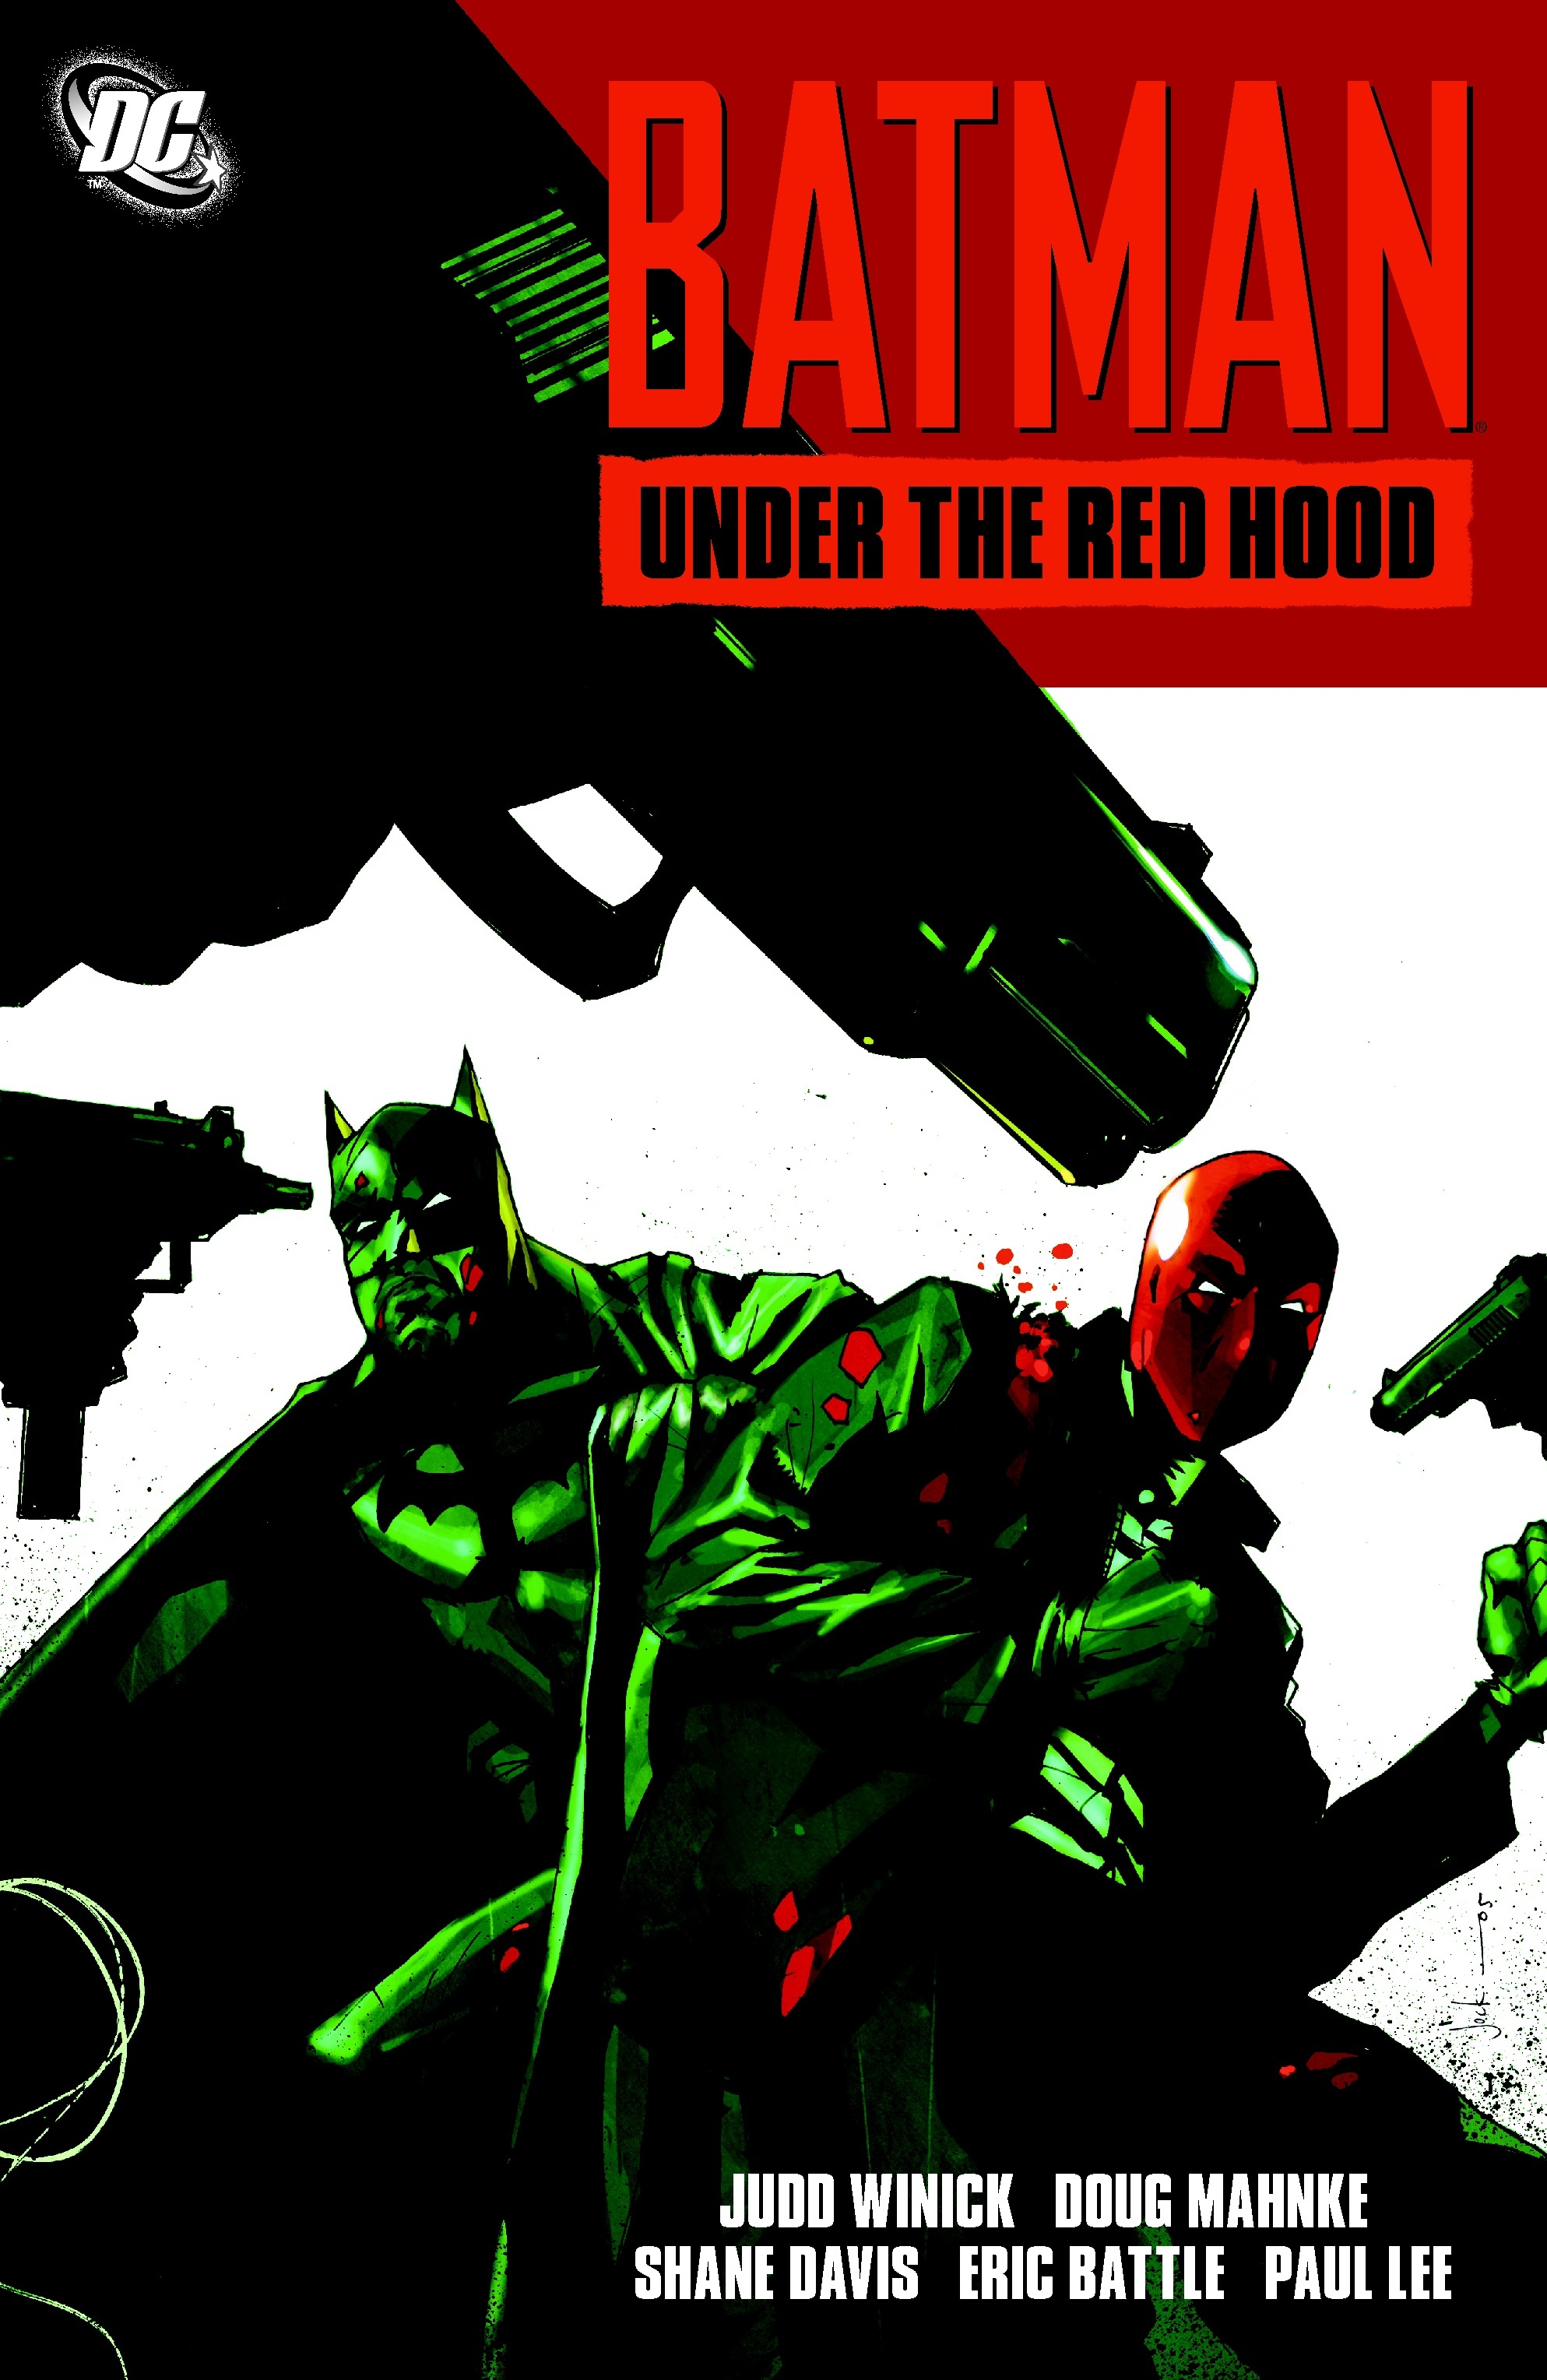 Batman: Under the Red Hood by Judd Winick - Penguin Books New Zealand